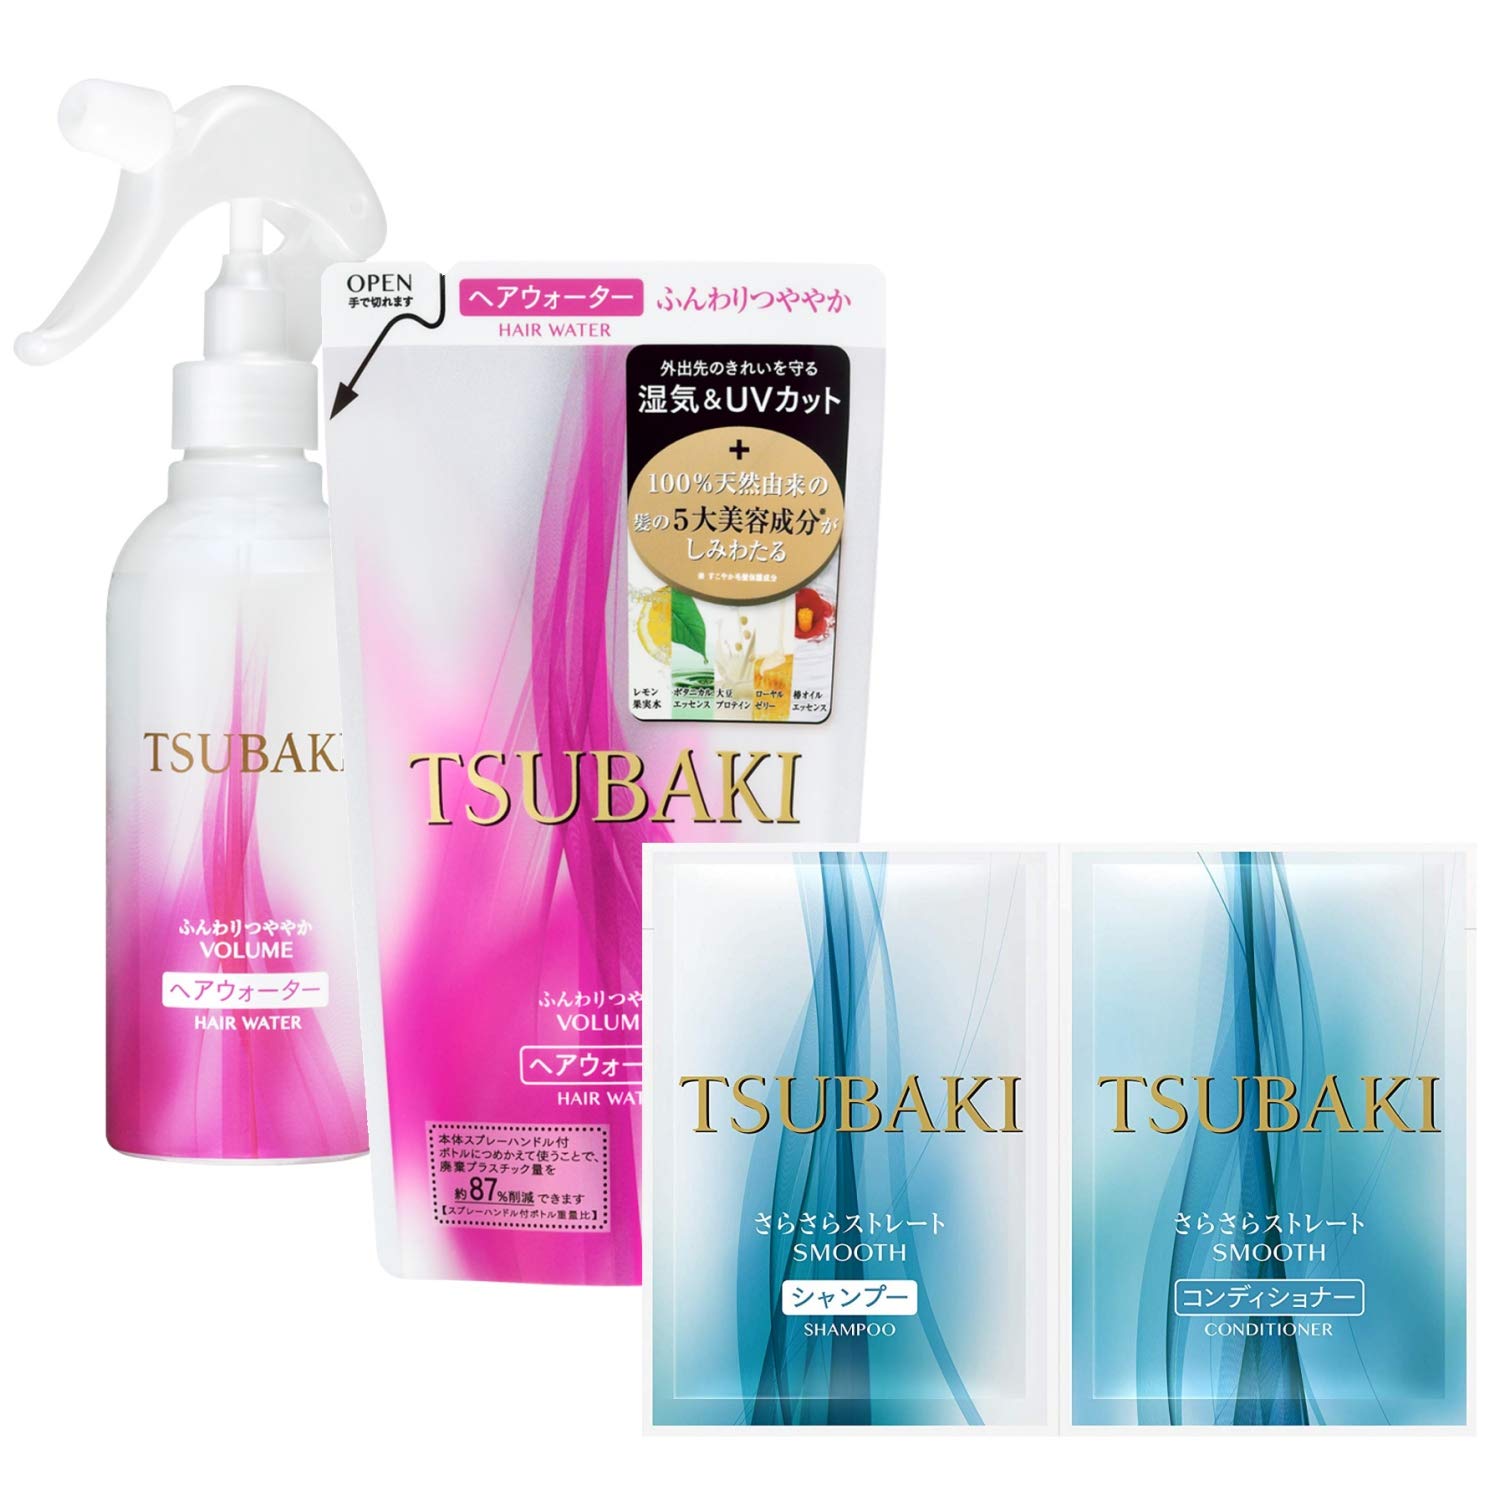 TSUBAKI Soft and Shiny Hair Water Body 7.5 fl oz  ml + Refill